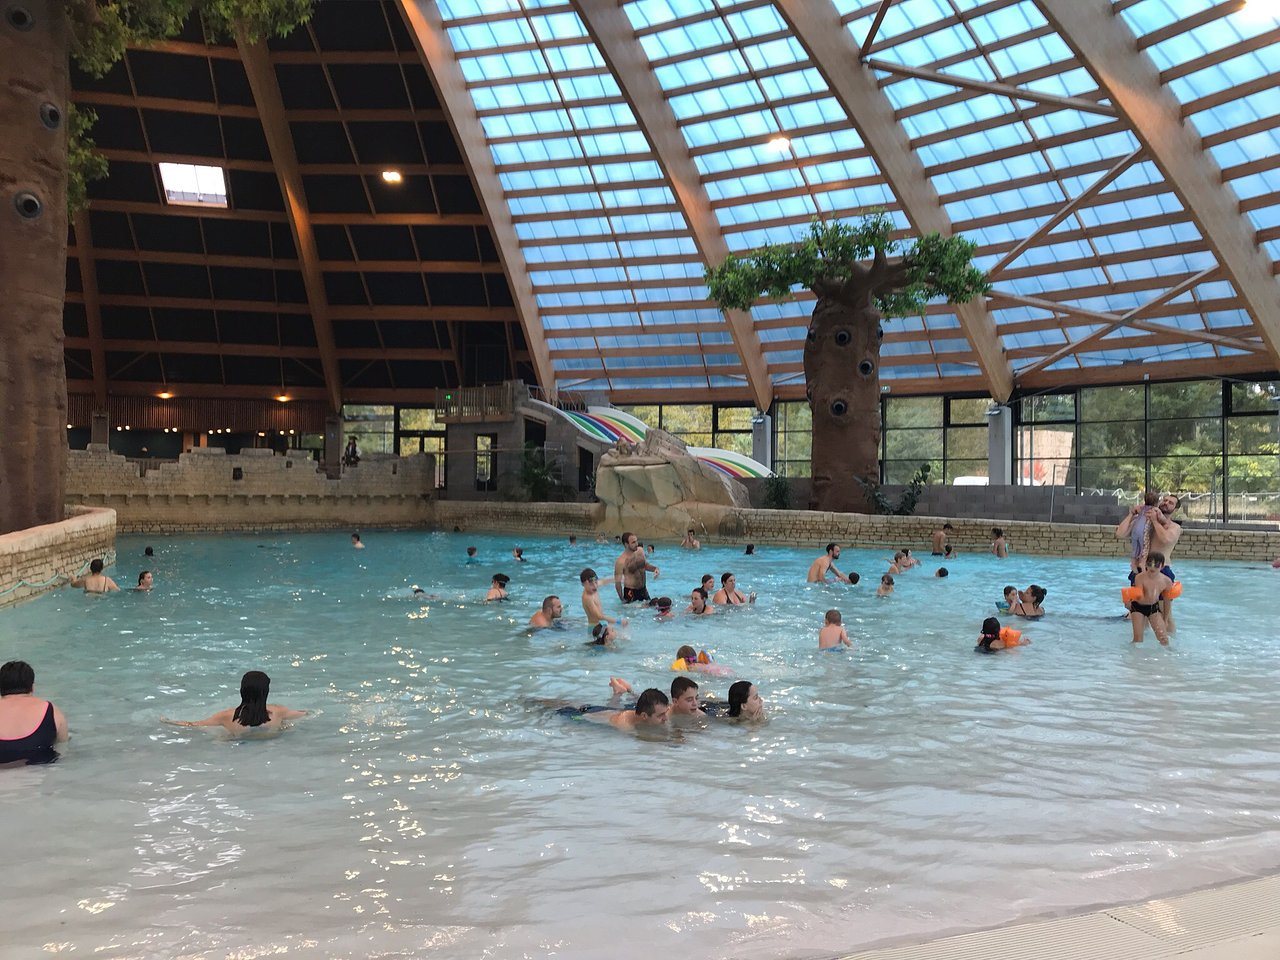 Les Ormes, Domaine &amp; Resort Pool Pictures &amp; Reviews ... encequiconcerne Piscine Dolibulle